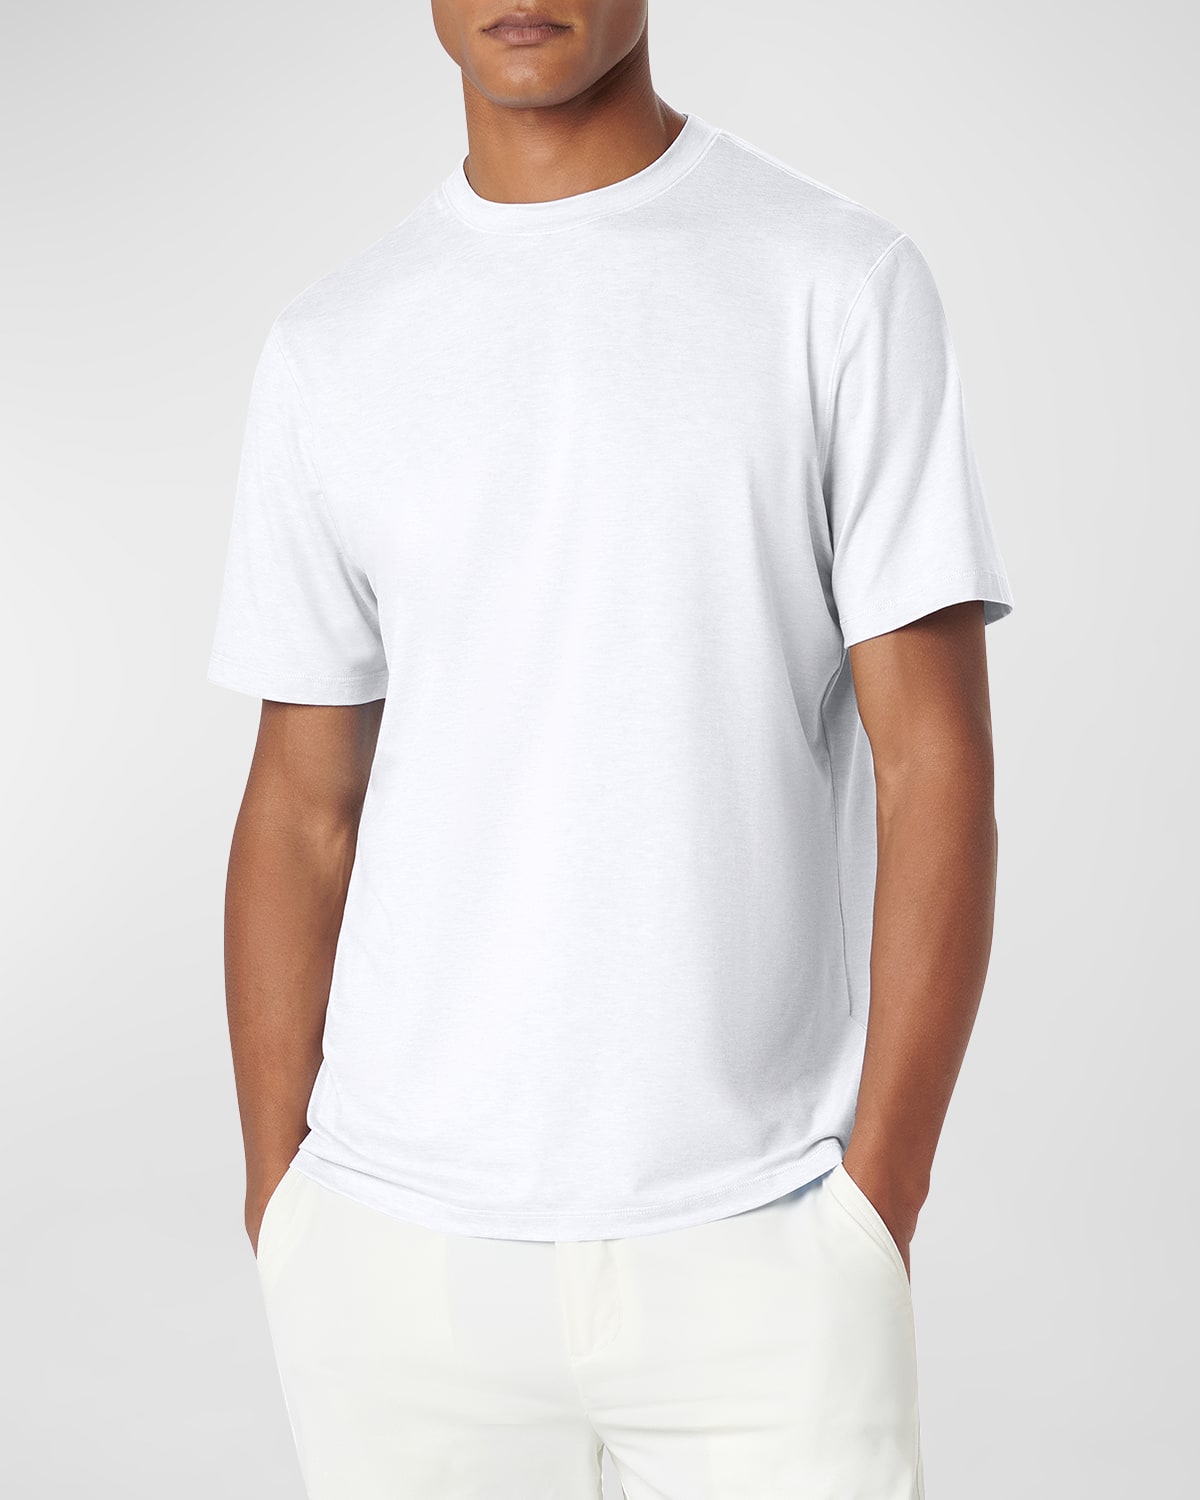 Men's UV50 Performance T-Shirt